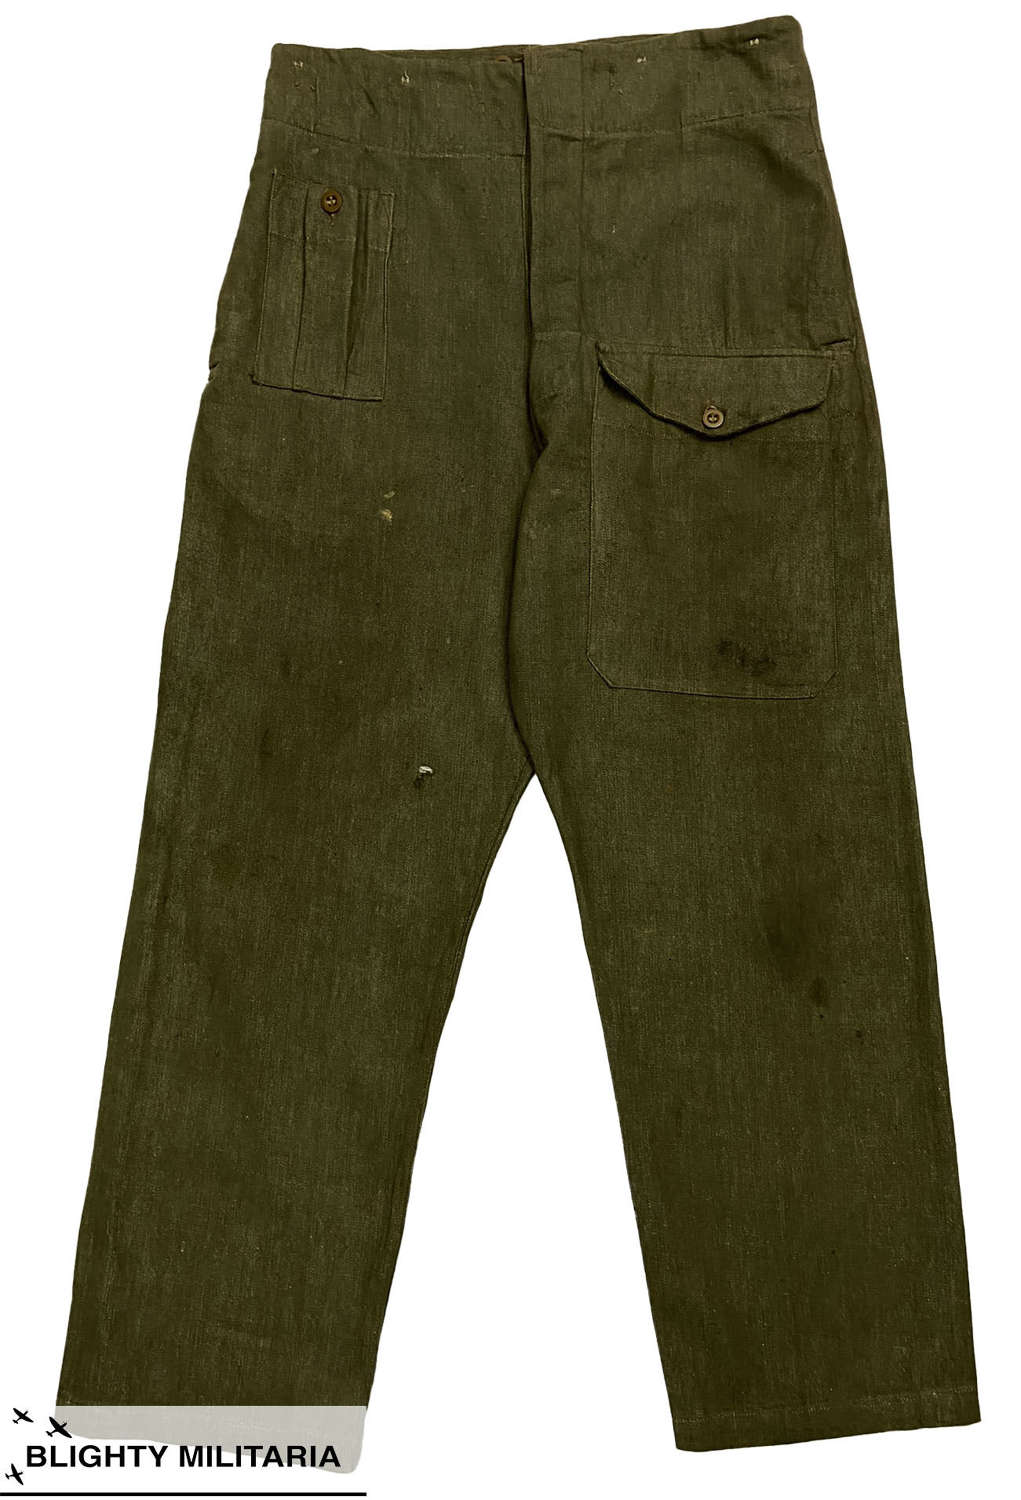 Original 1951 Dated British Denim Battledress Trousers - Size 8